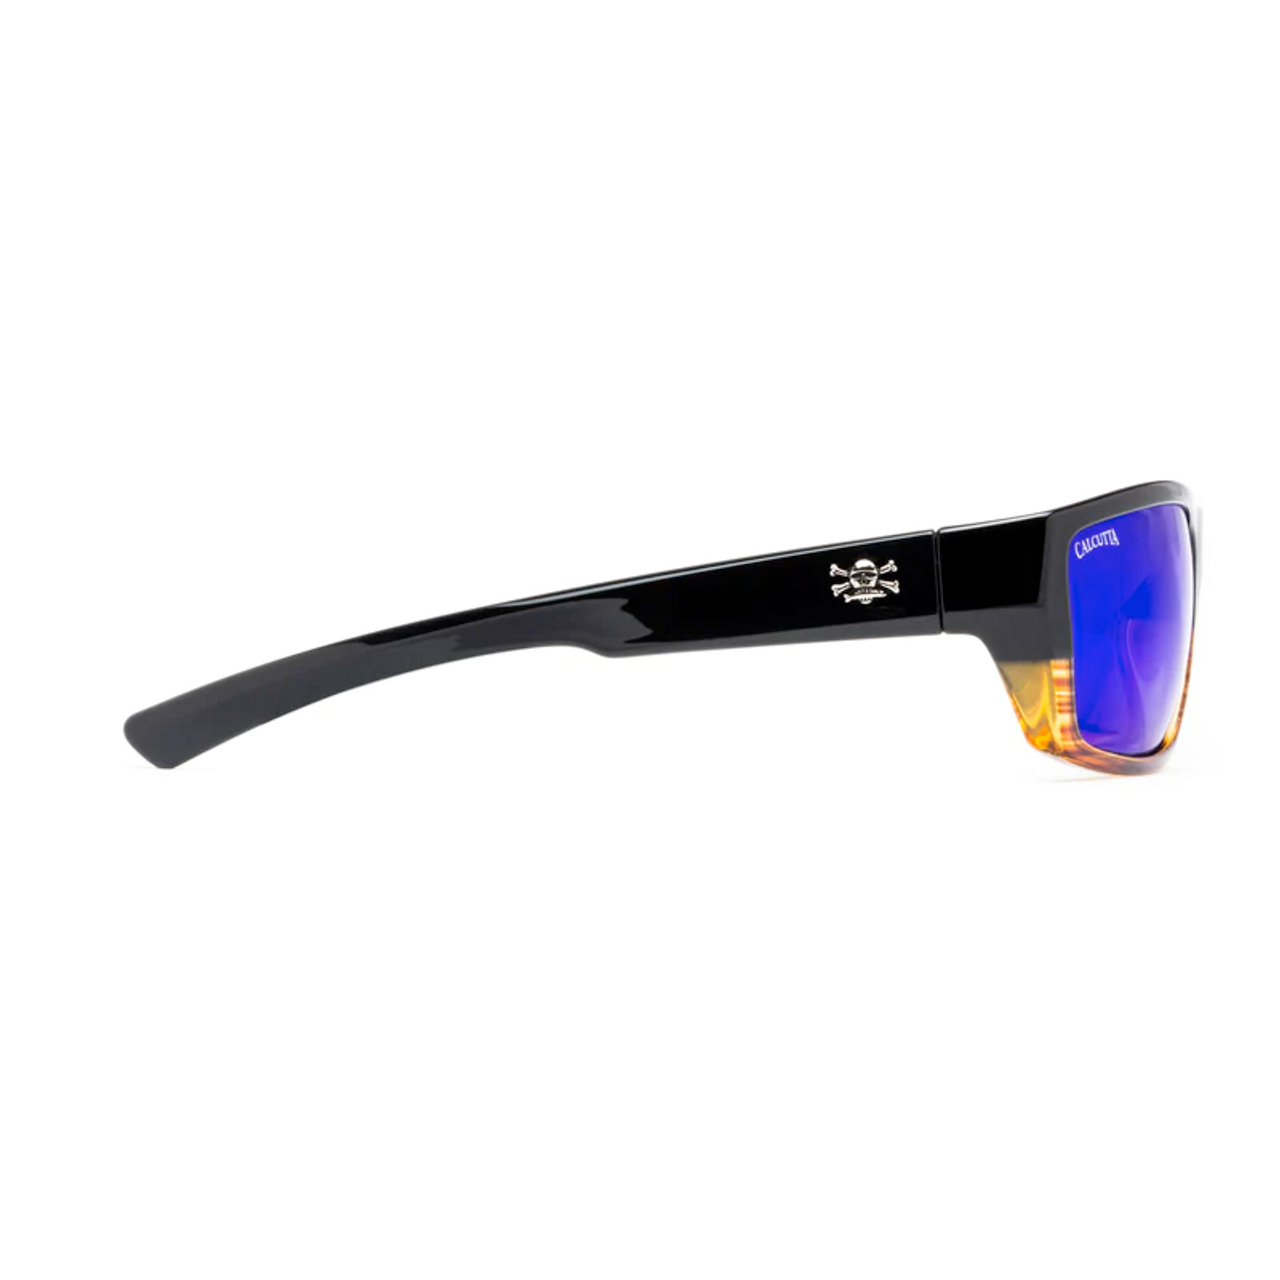 Calcutta Shock Wave Sunglasses, Wood Grain Fade Frame/ Blue Mirror Lens